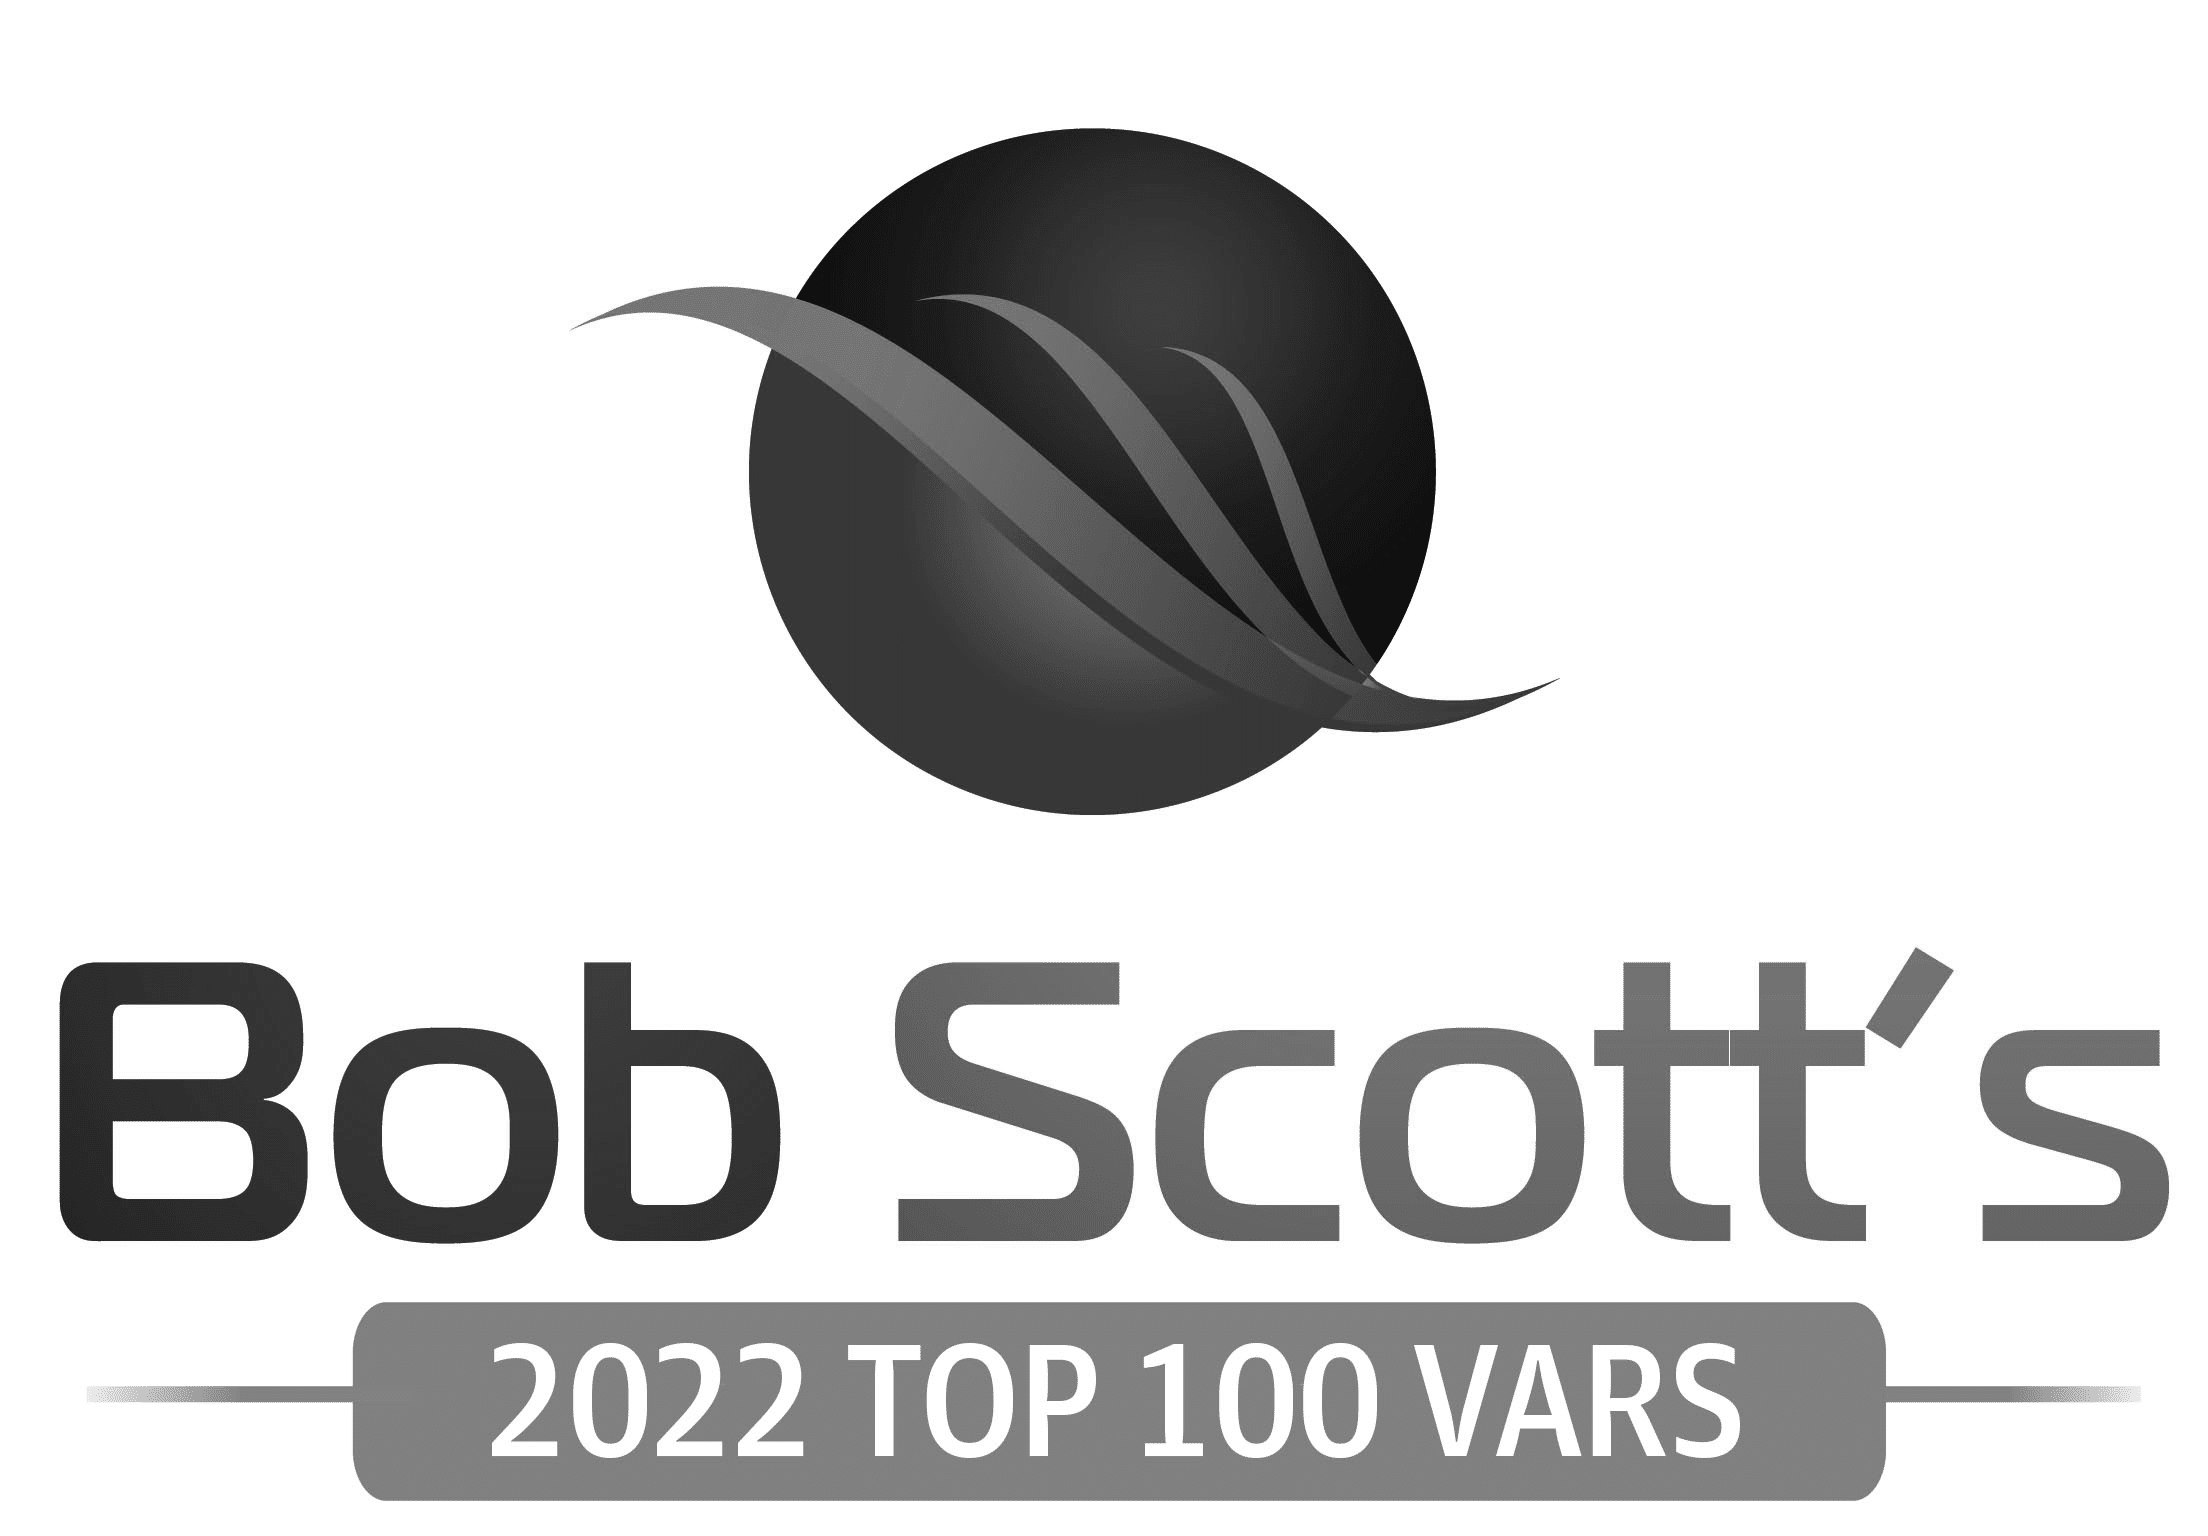 Bob Scott Top 100 VARs 2022 logo